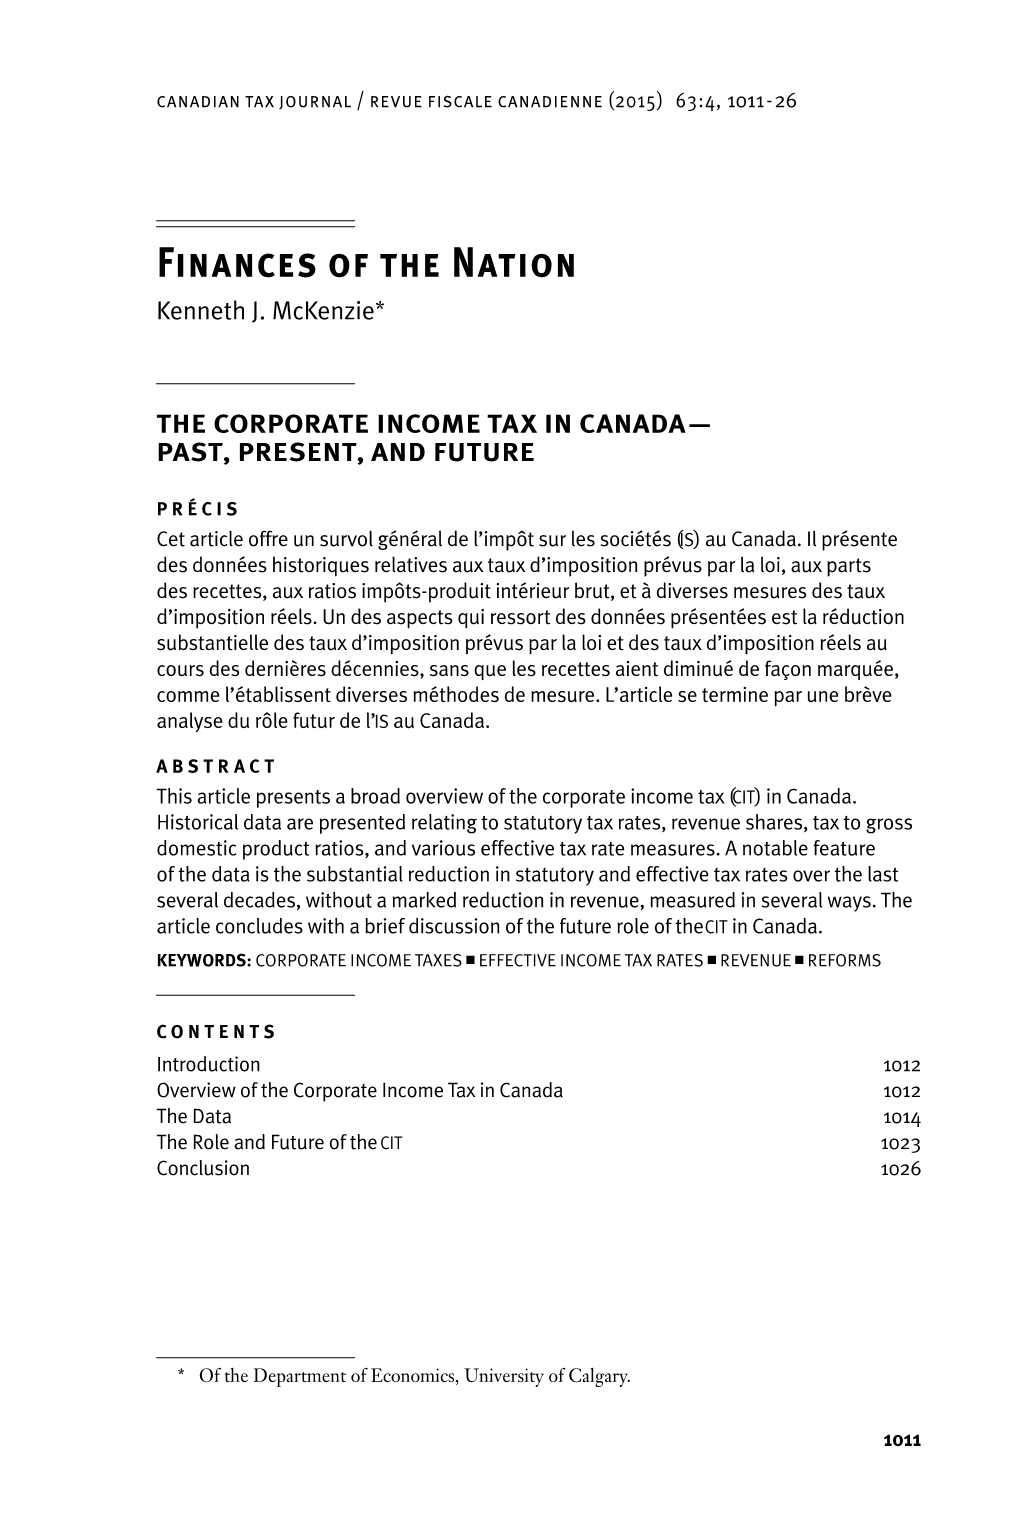 Canadian Tax Journal, Vol. 63, No. 4, 2015